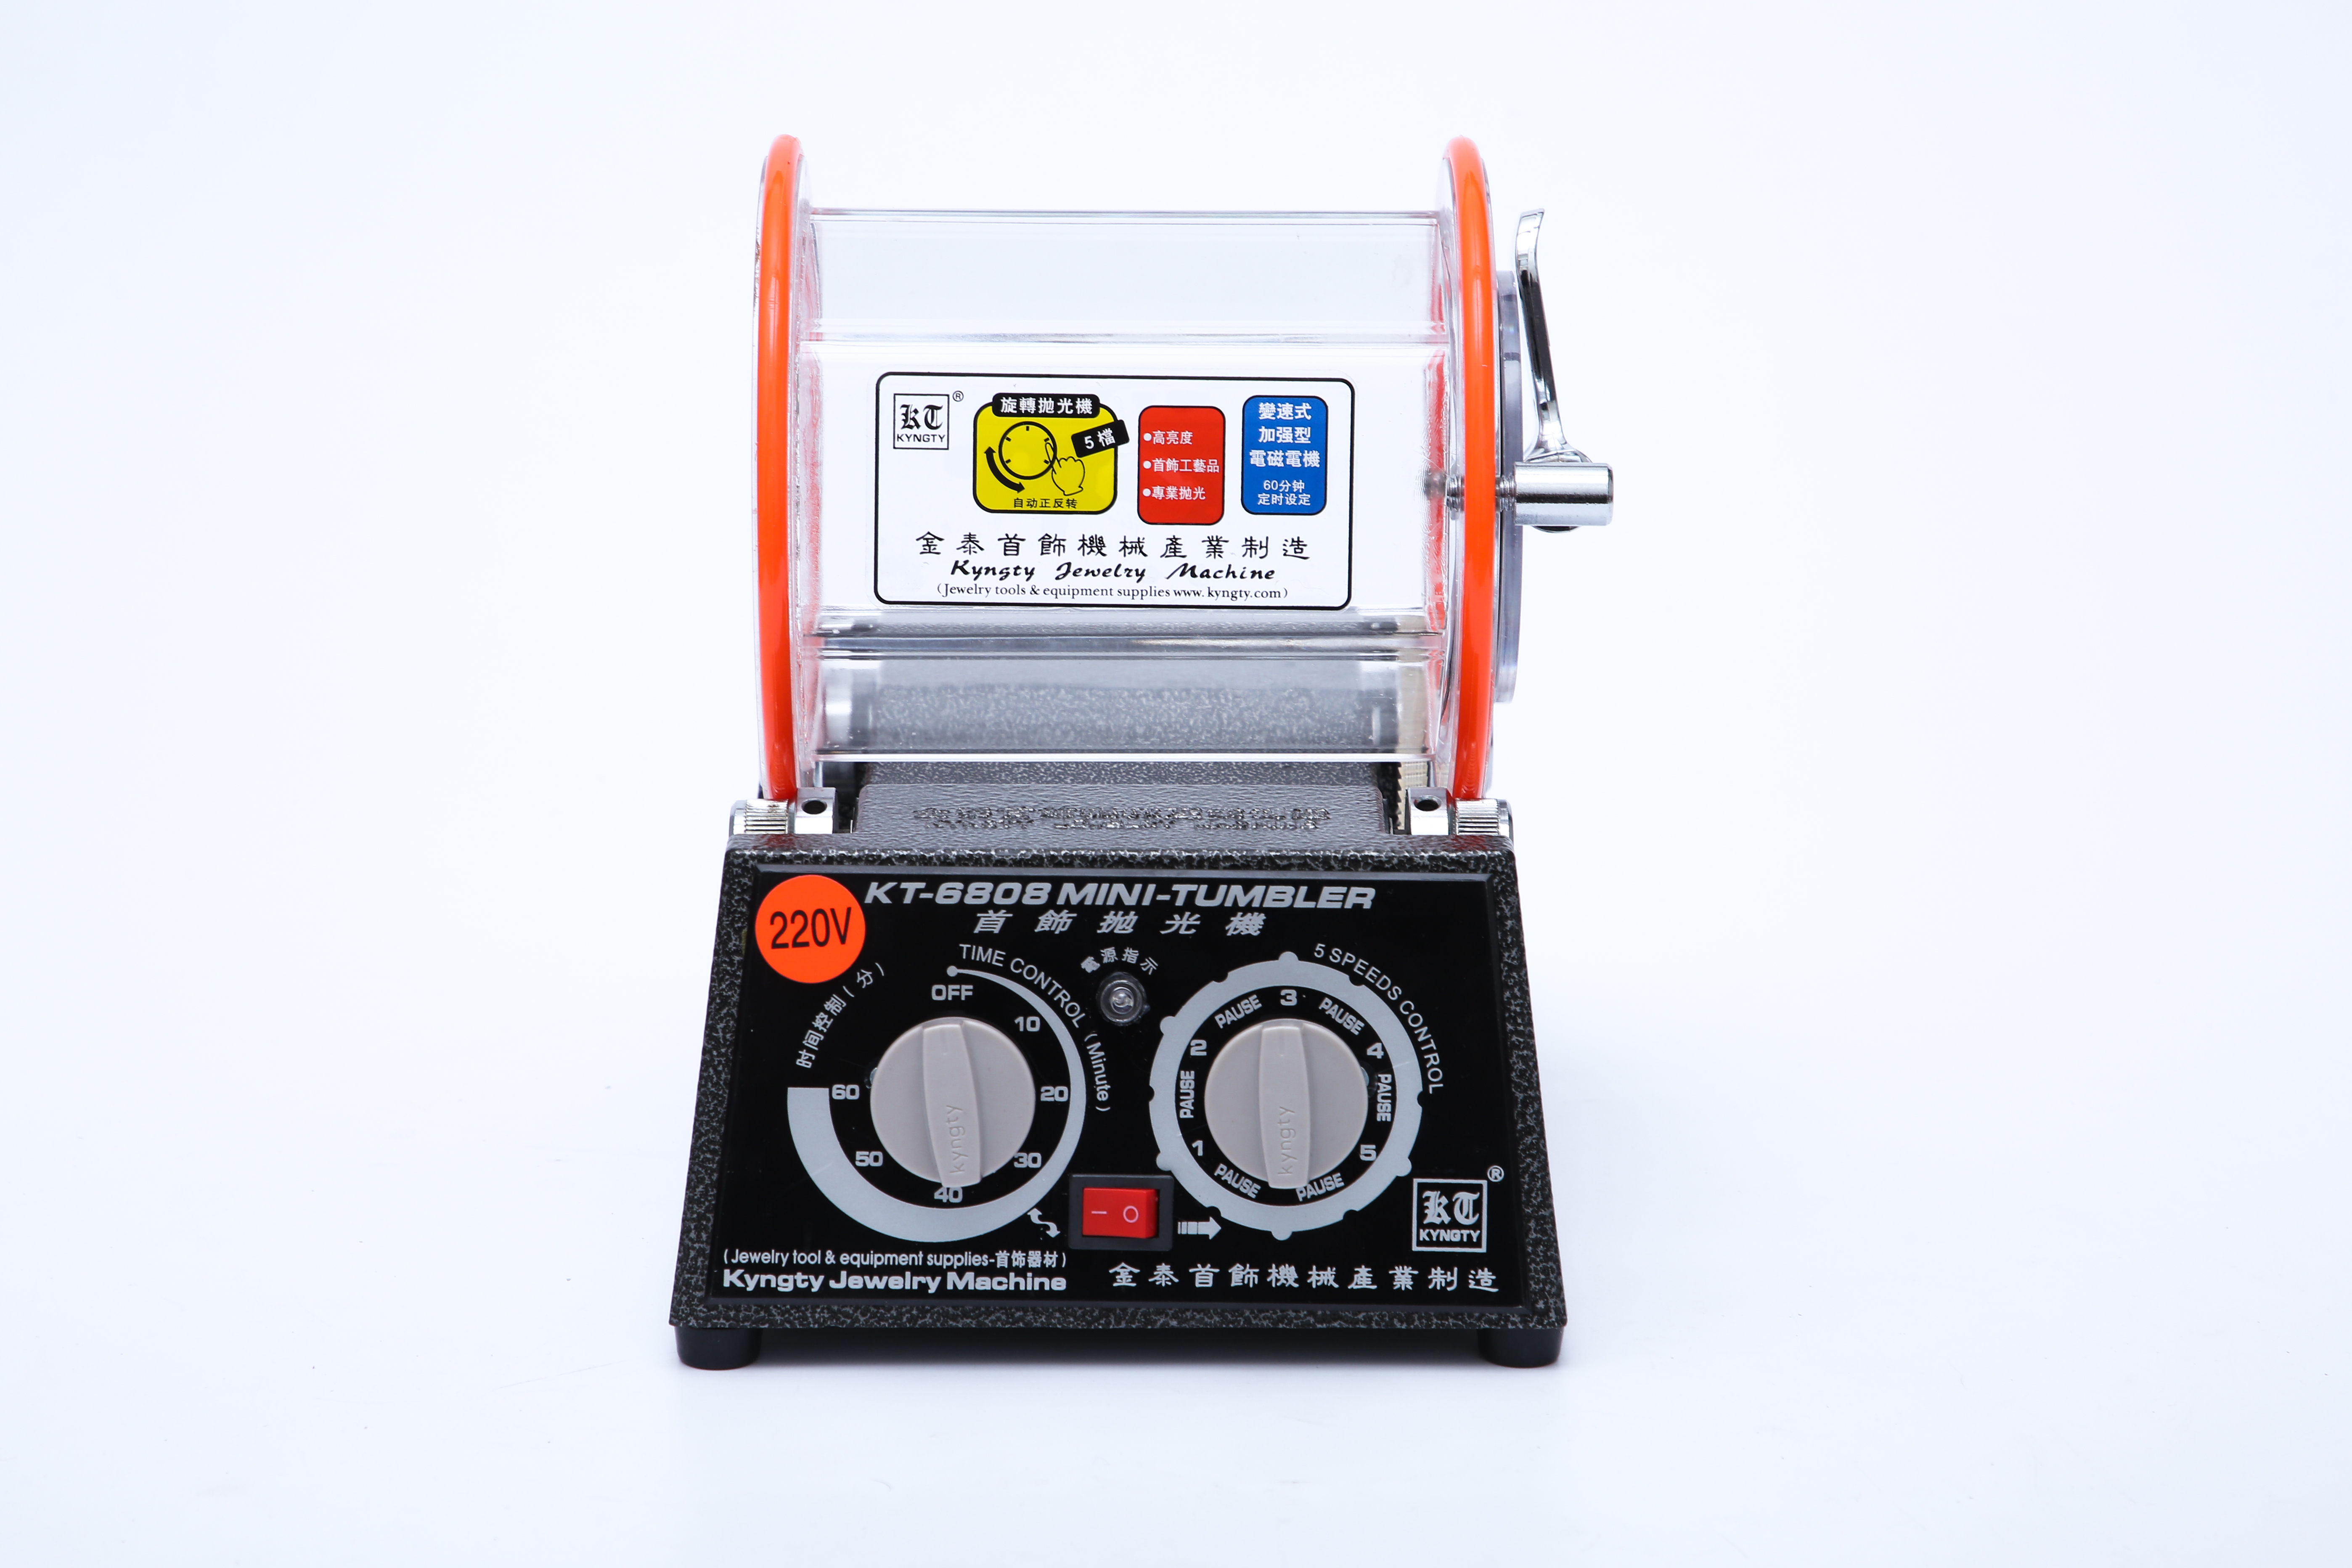 KT-6808 Rotary tumbler